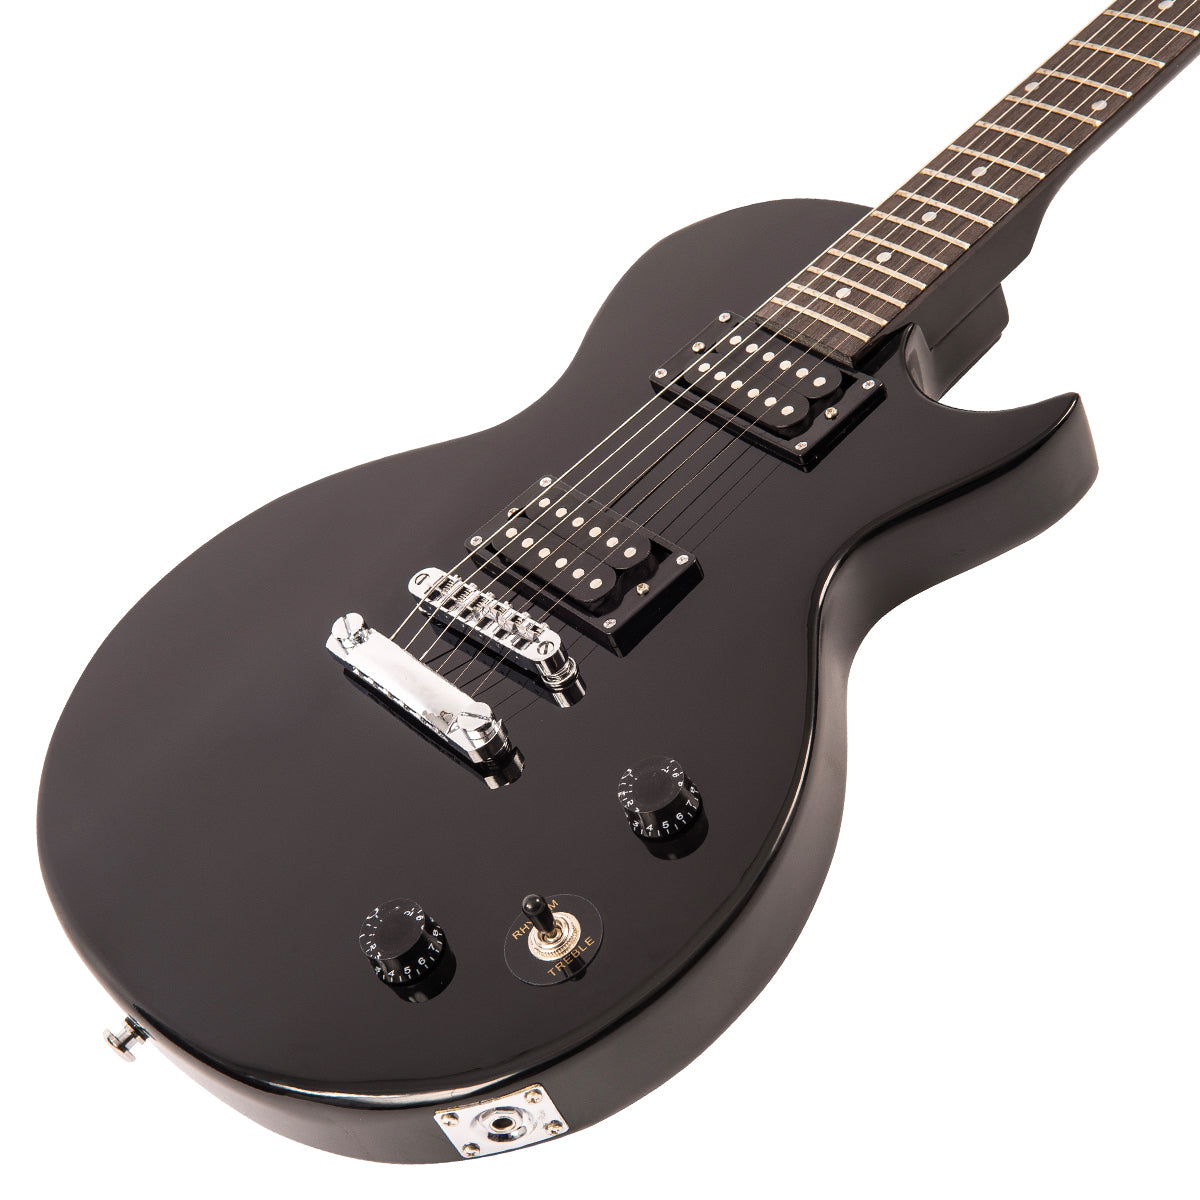 Encore Blaster E90 Electric Guitar Pack ~ Gloss Black